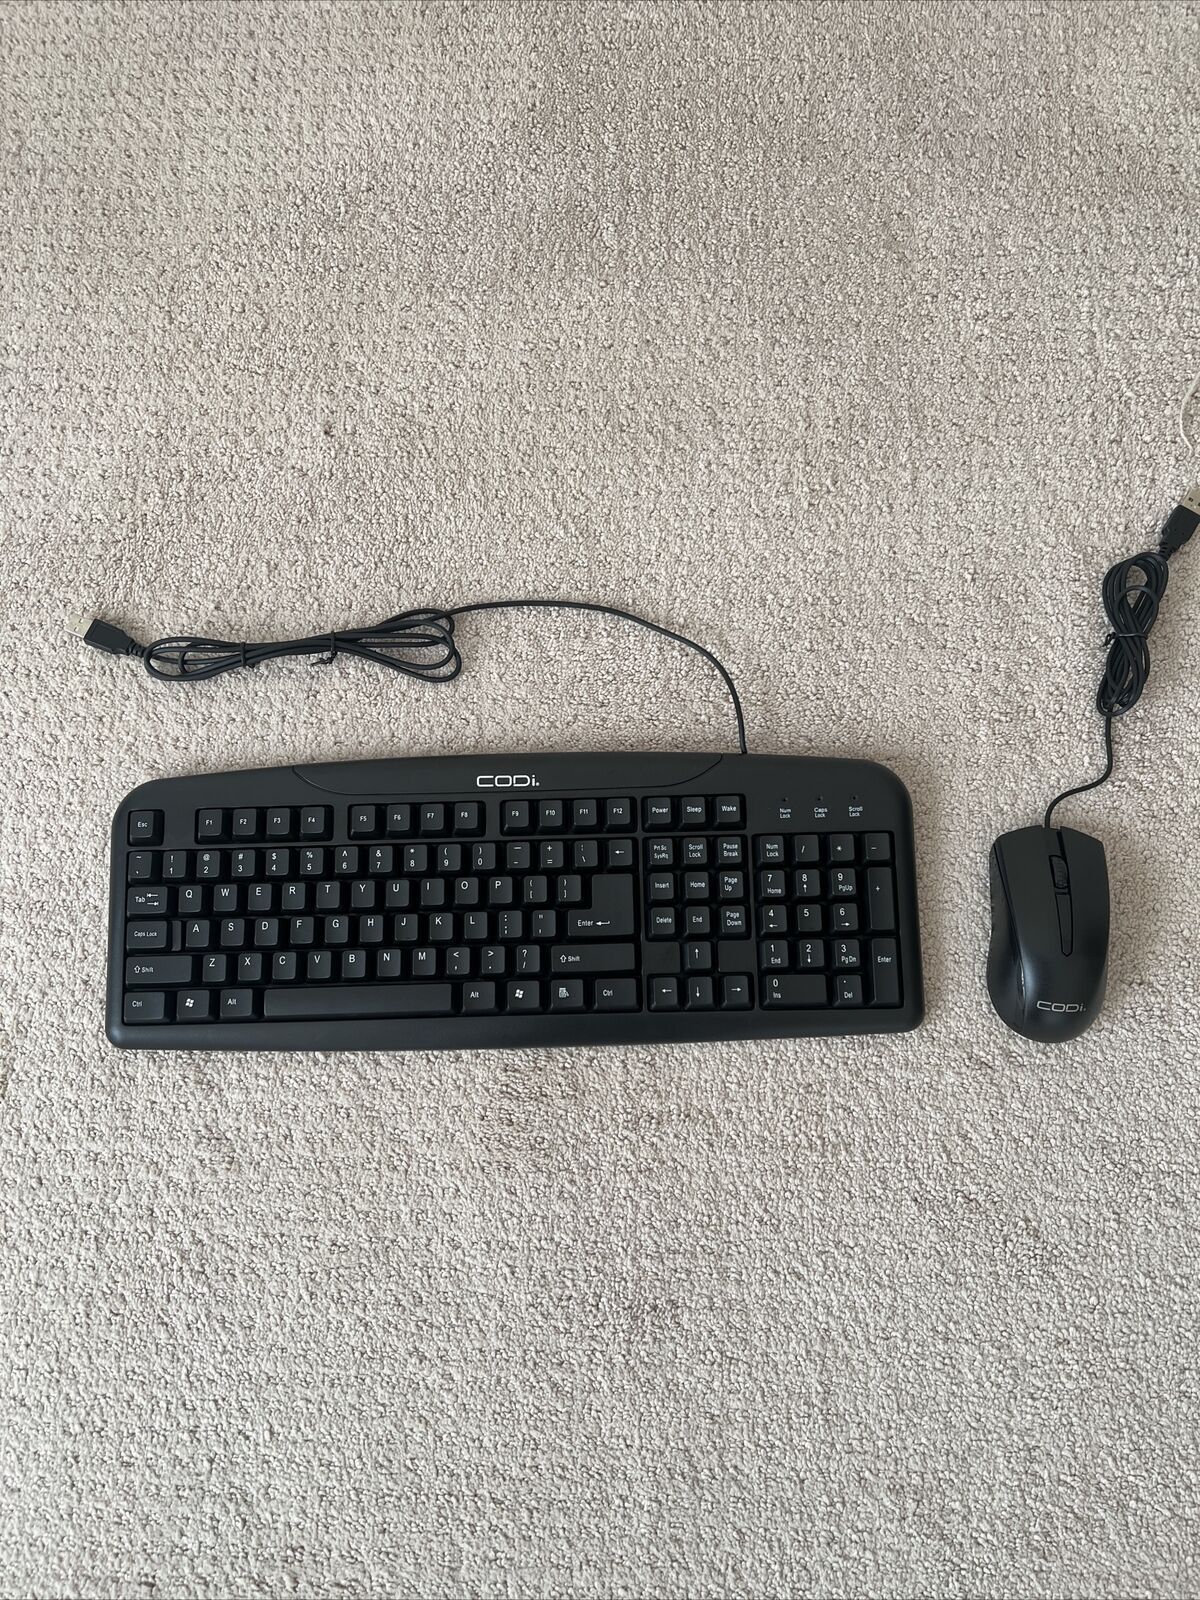 codi keyboard and mouse new without box usb